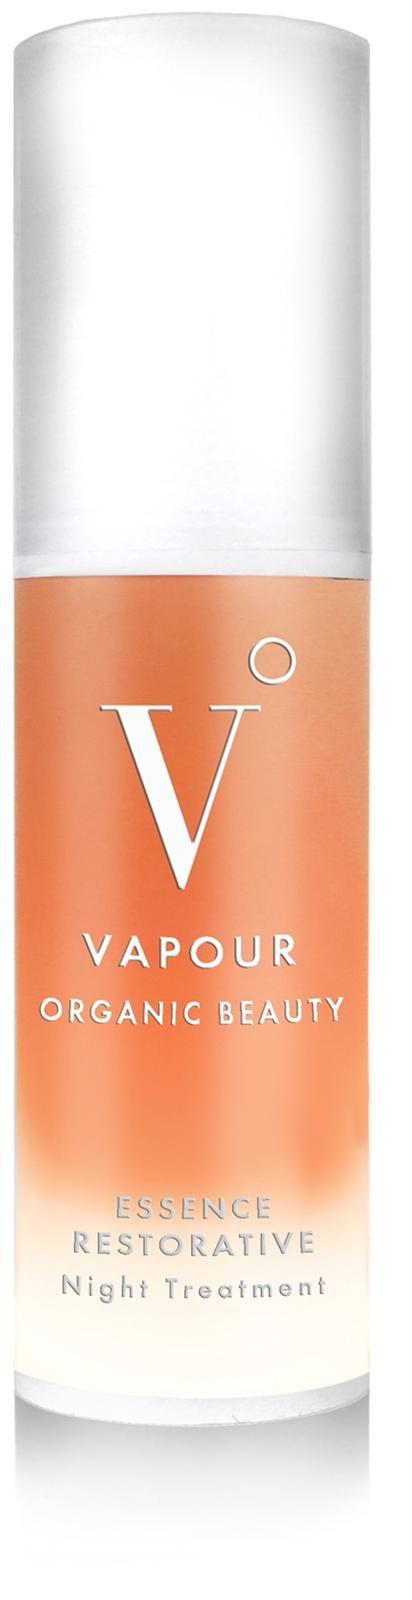 Vapour Organic Beauty Essence Restorative Night Treatment